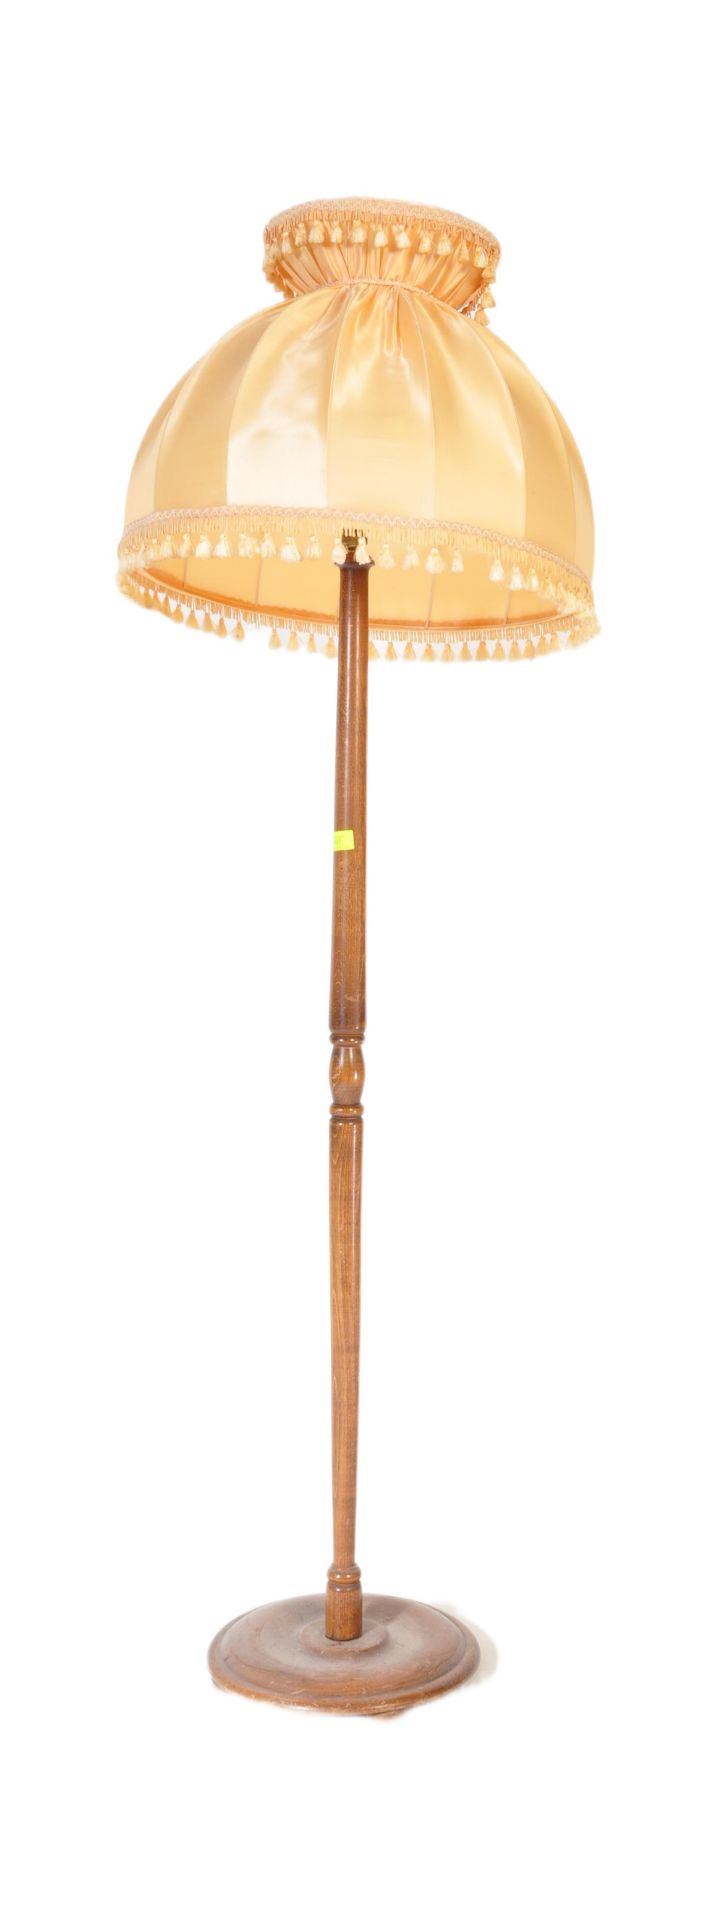 VINTAGE CIRCA 1940S MAHOGANY FLOOR STANDARD LAMP